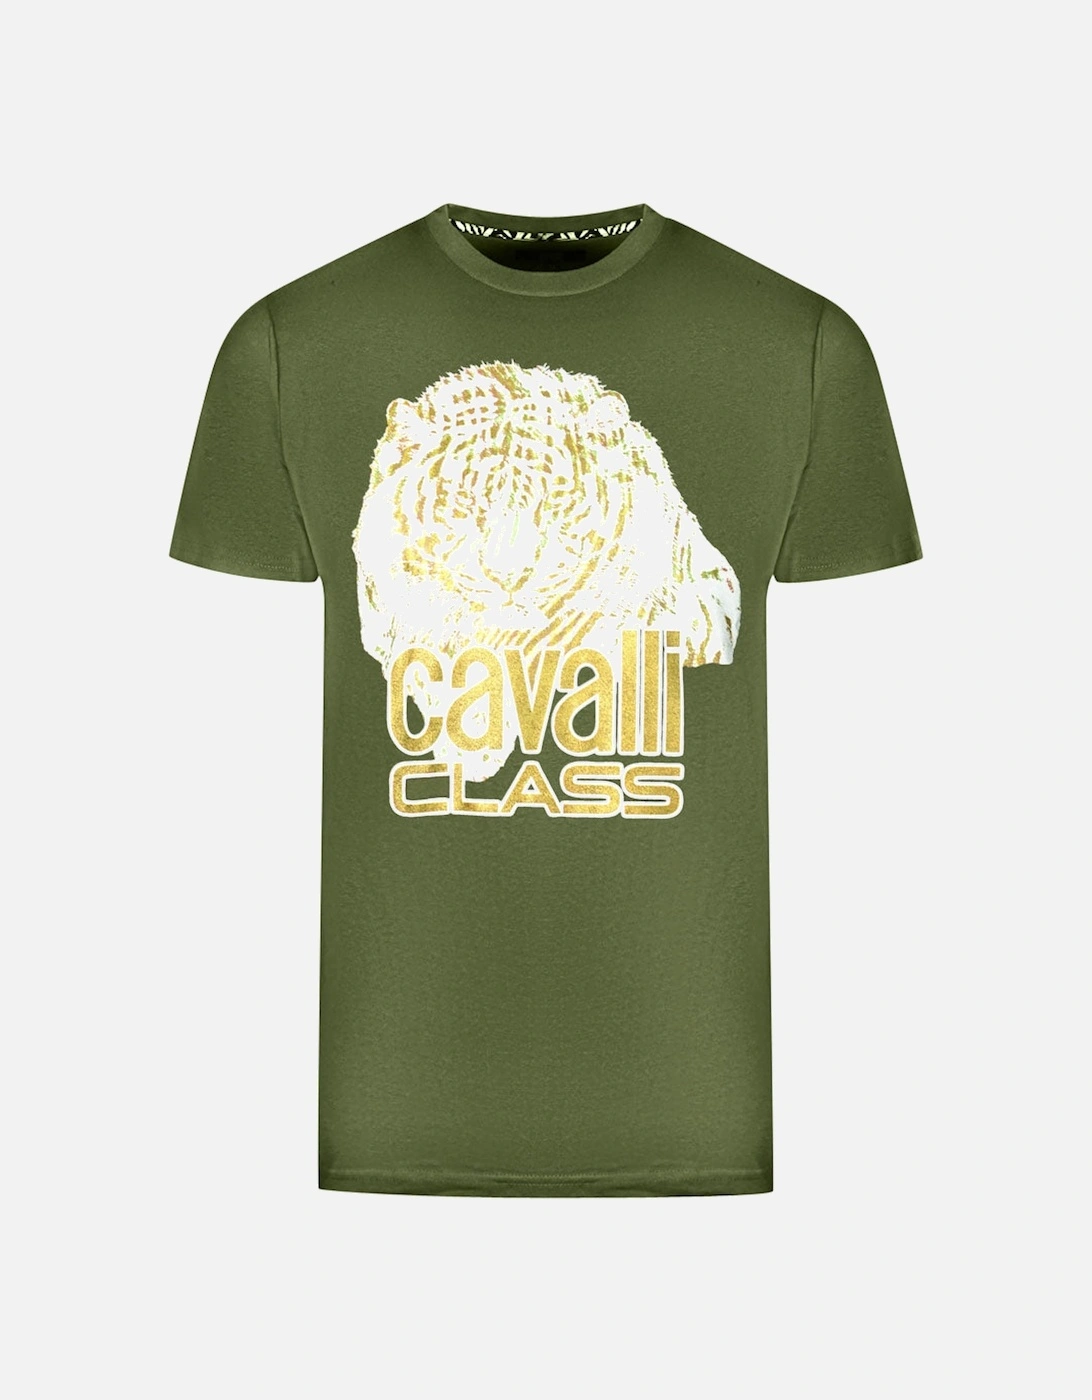 Cavalli Class Large Tiger Logo Green T-Shirt